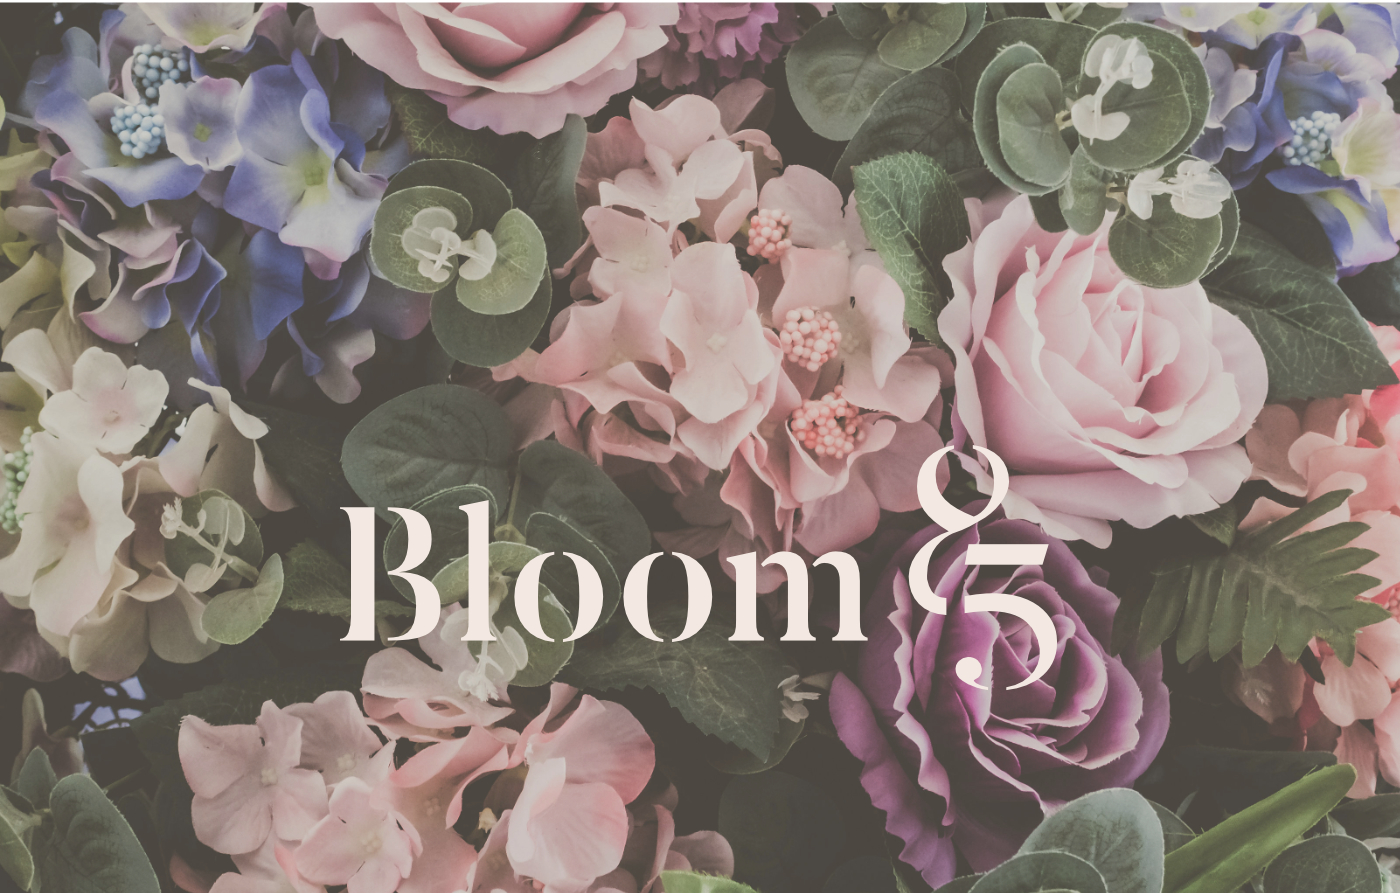 Povestea celor 85 de ingrediente Bloom85